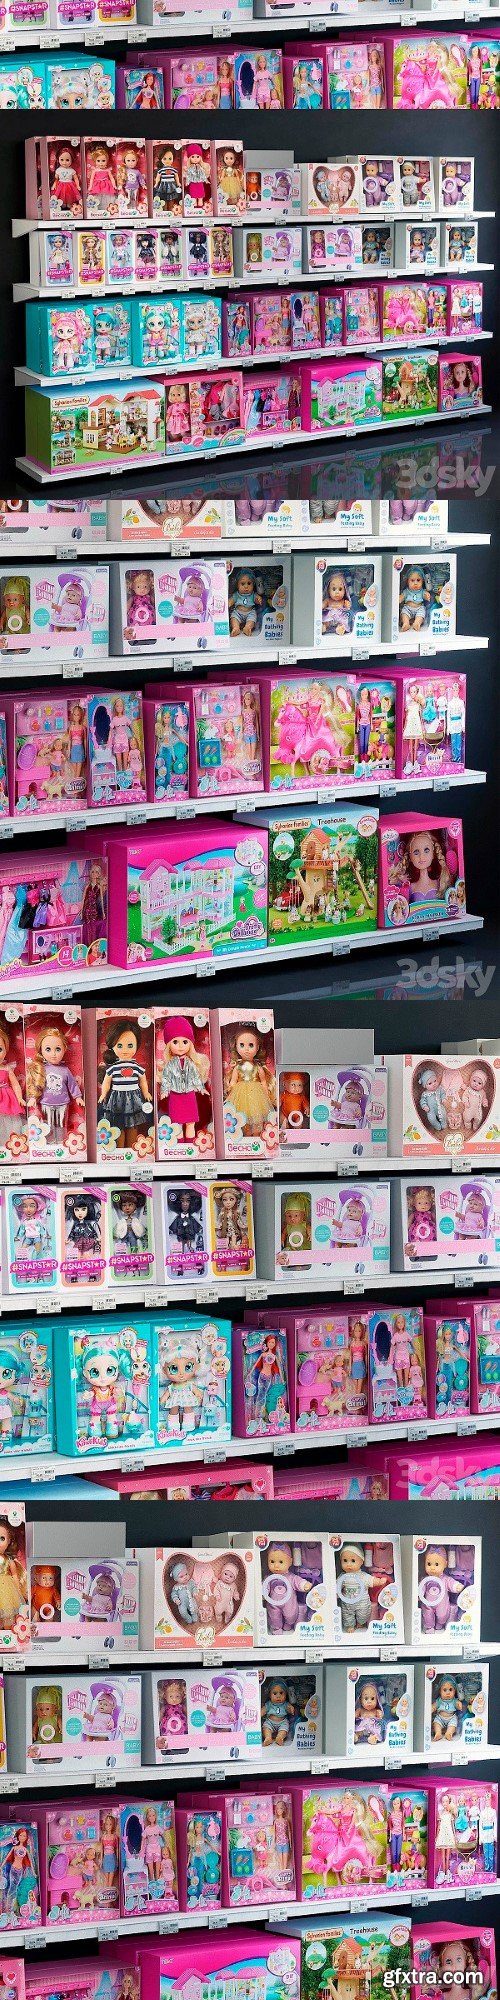 Pro 3DSky - Showcase 032 Dolls